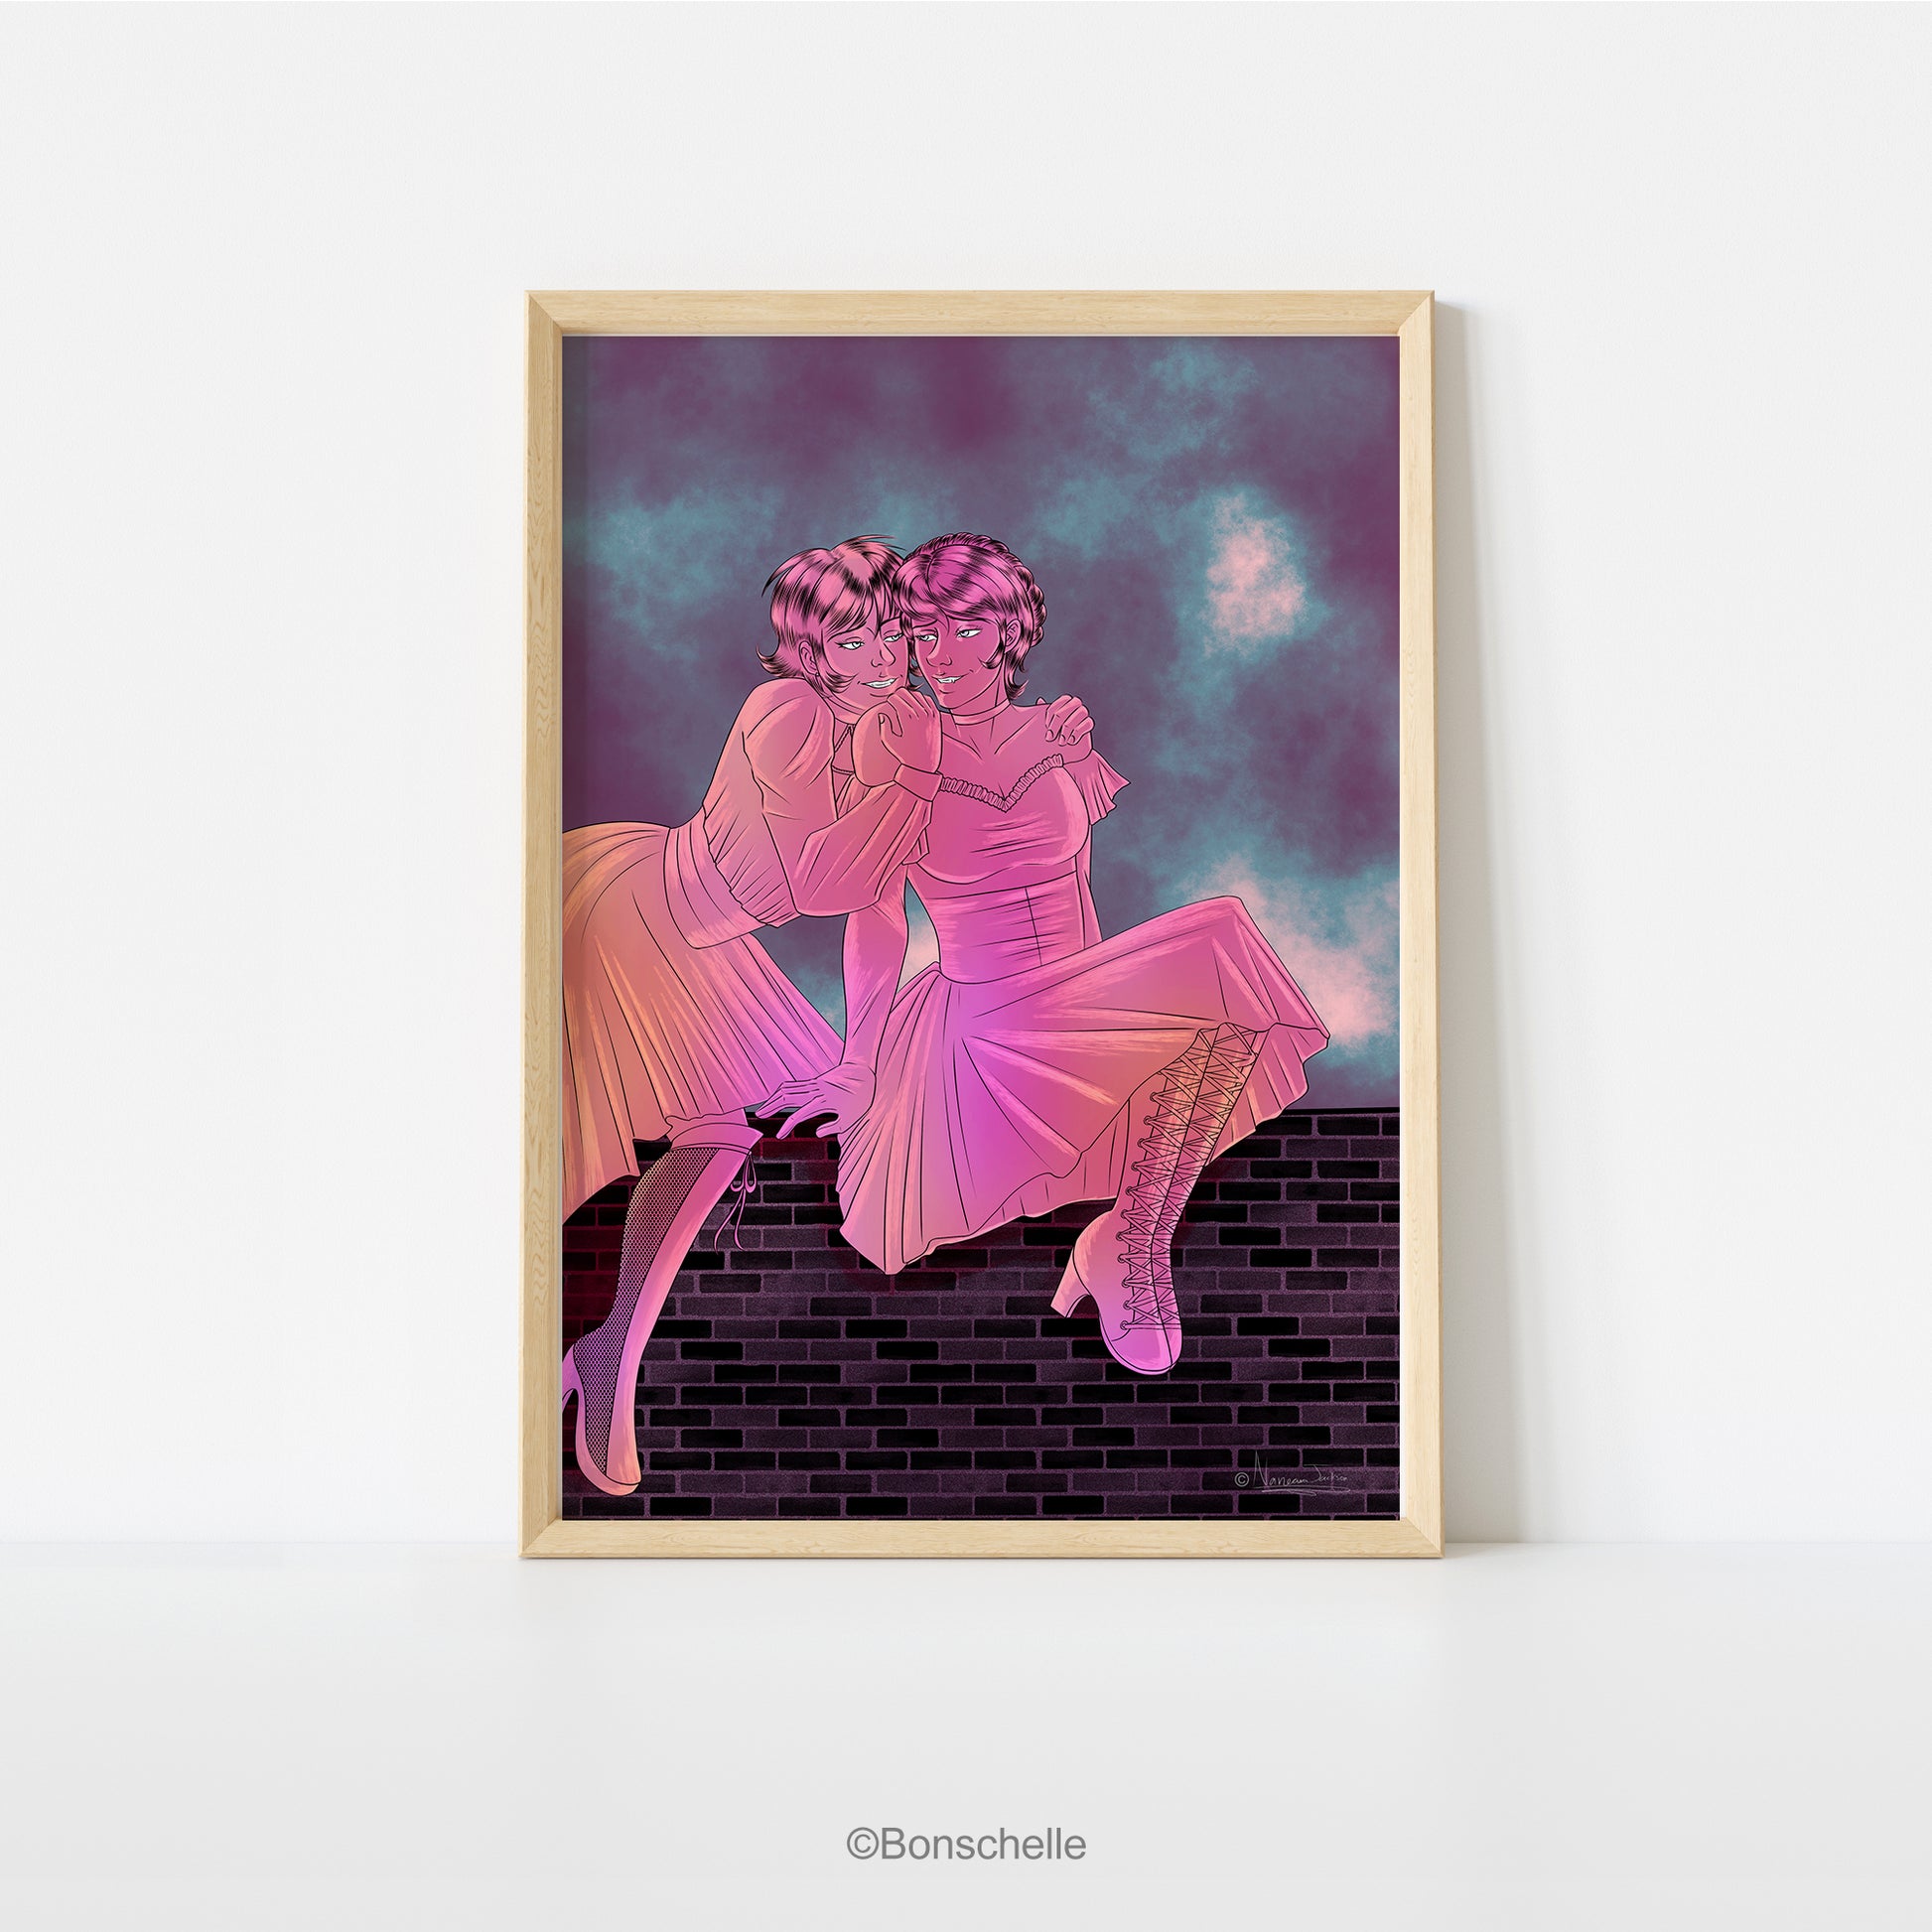 Vampire Lolita Lovers Neon Gothic Digital Art Poster Print, shwon framed hanging on a wall